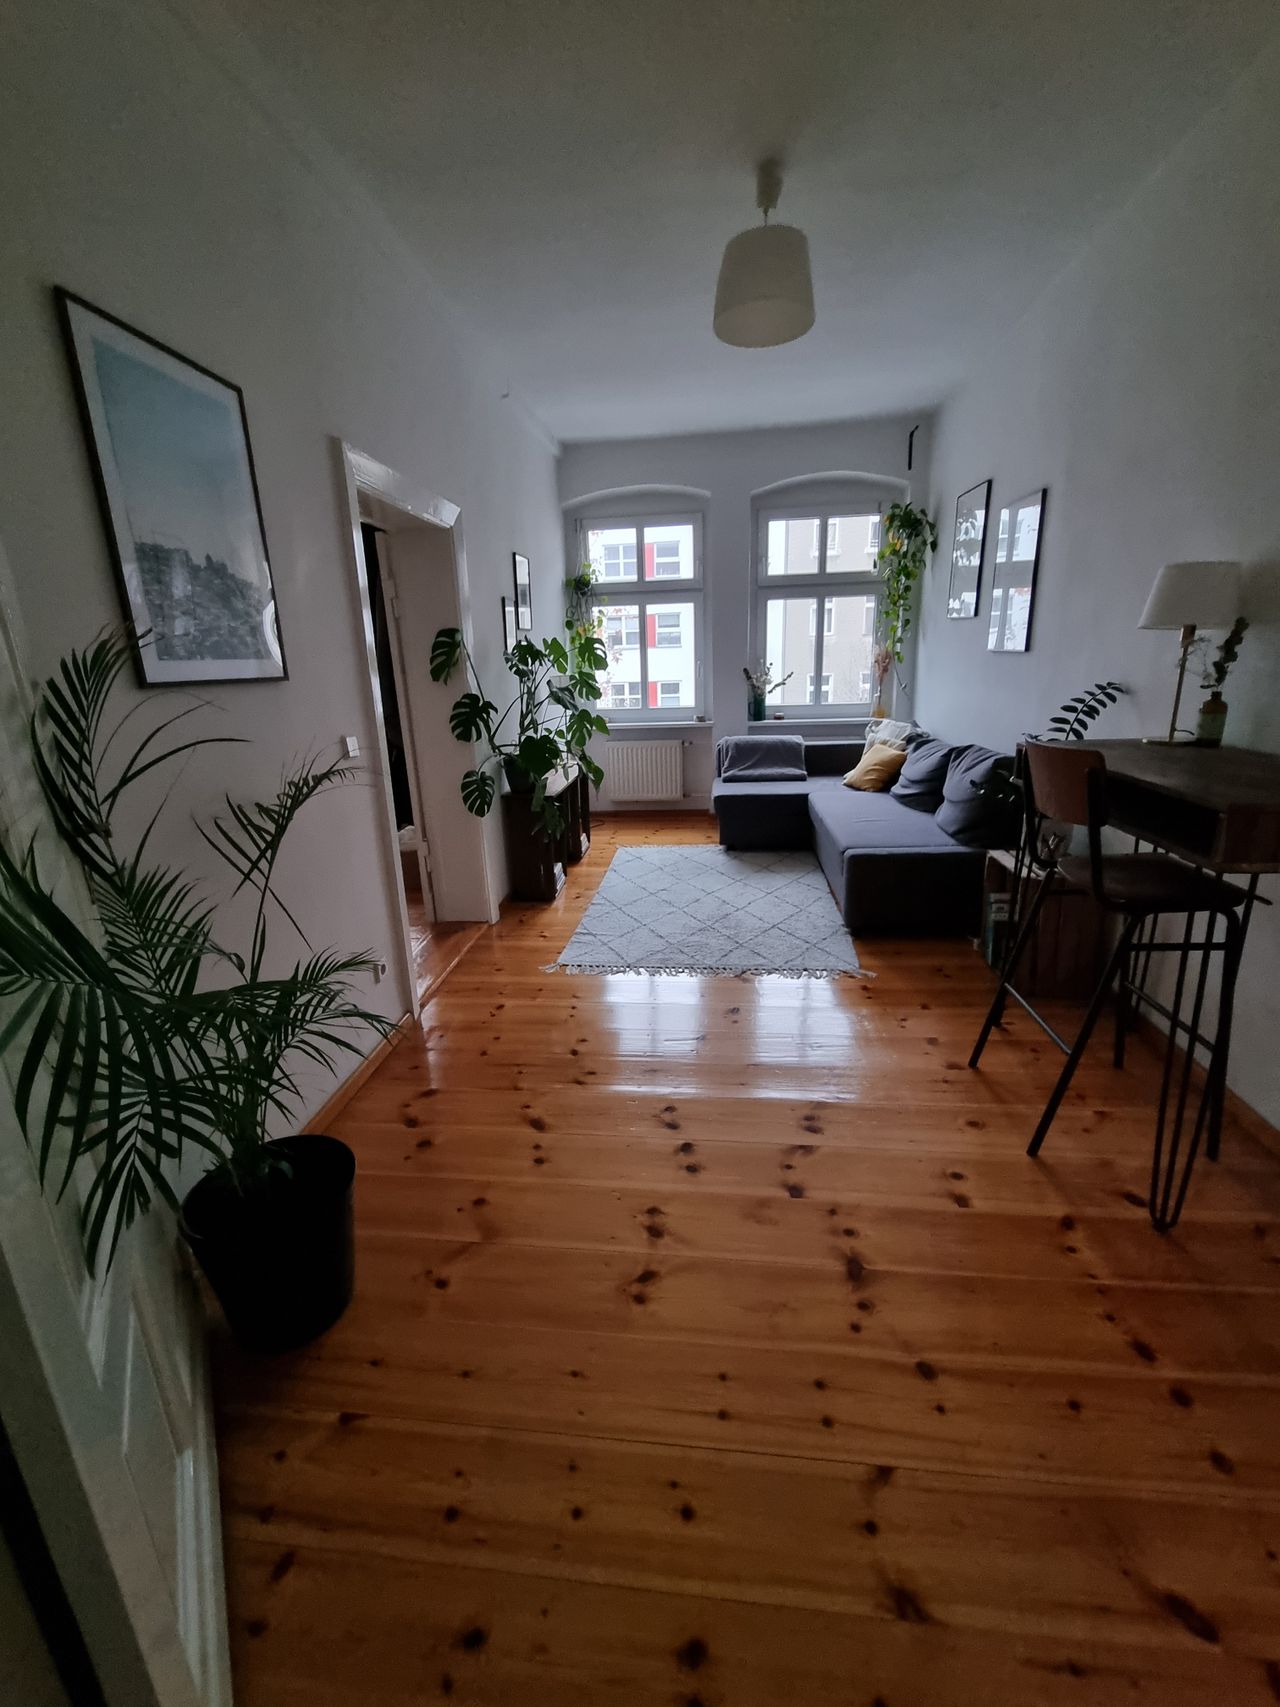 Wonderful, cozy, bright and quiet apartment between Zionskirchplatz and Rosenthaler Platz